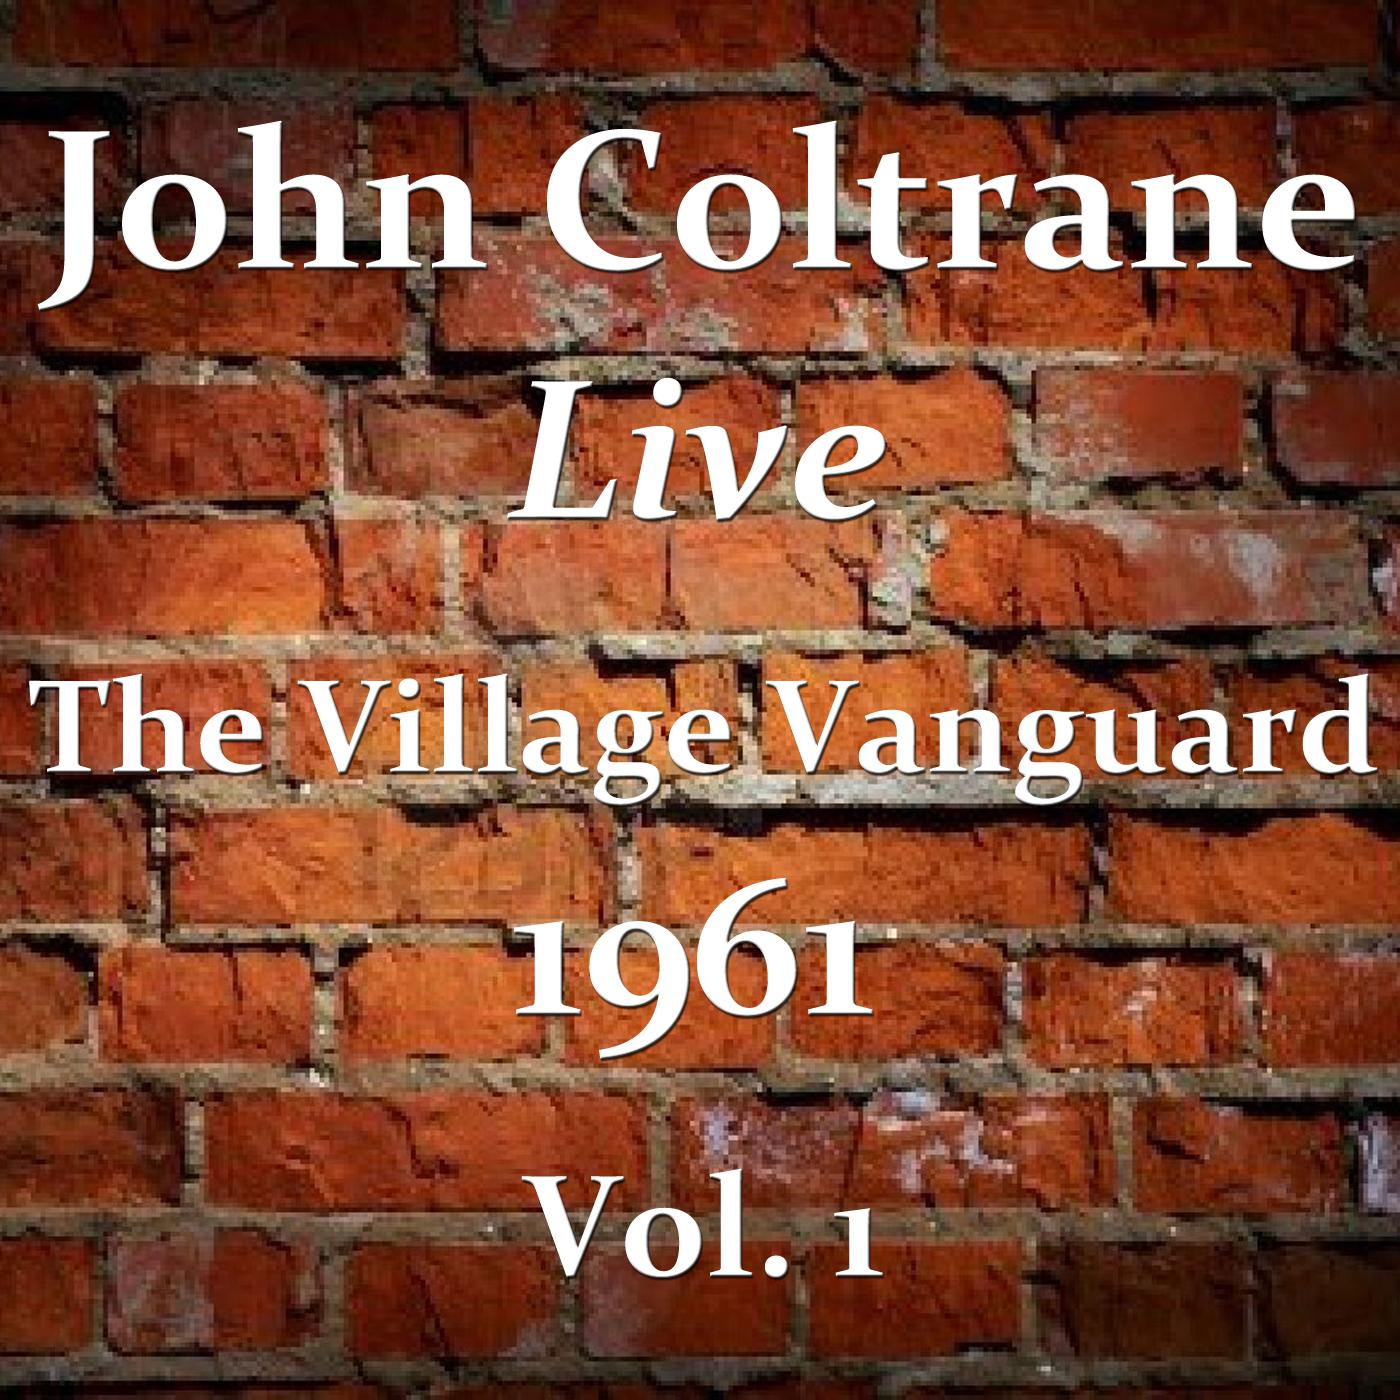 The Village Vanguard 1961 Vol. 1 (Live)